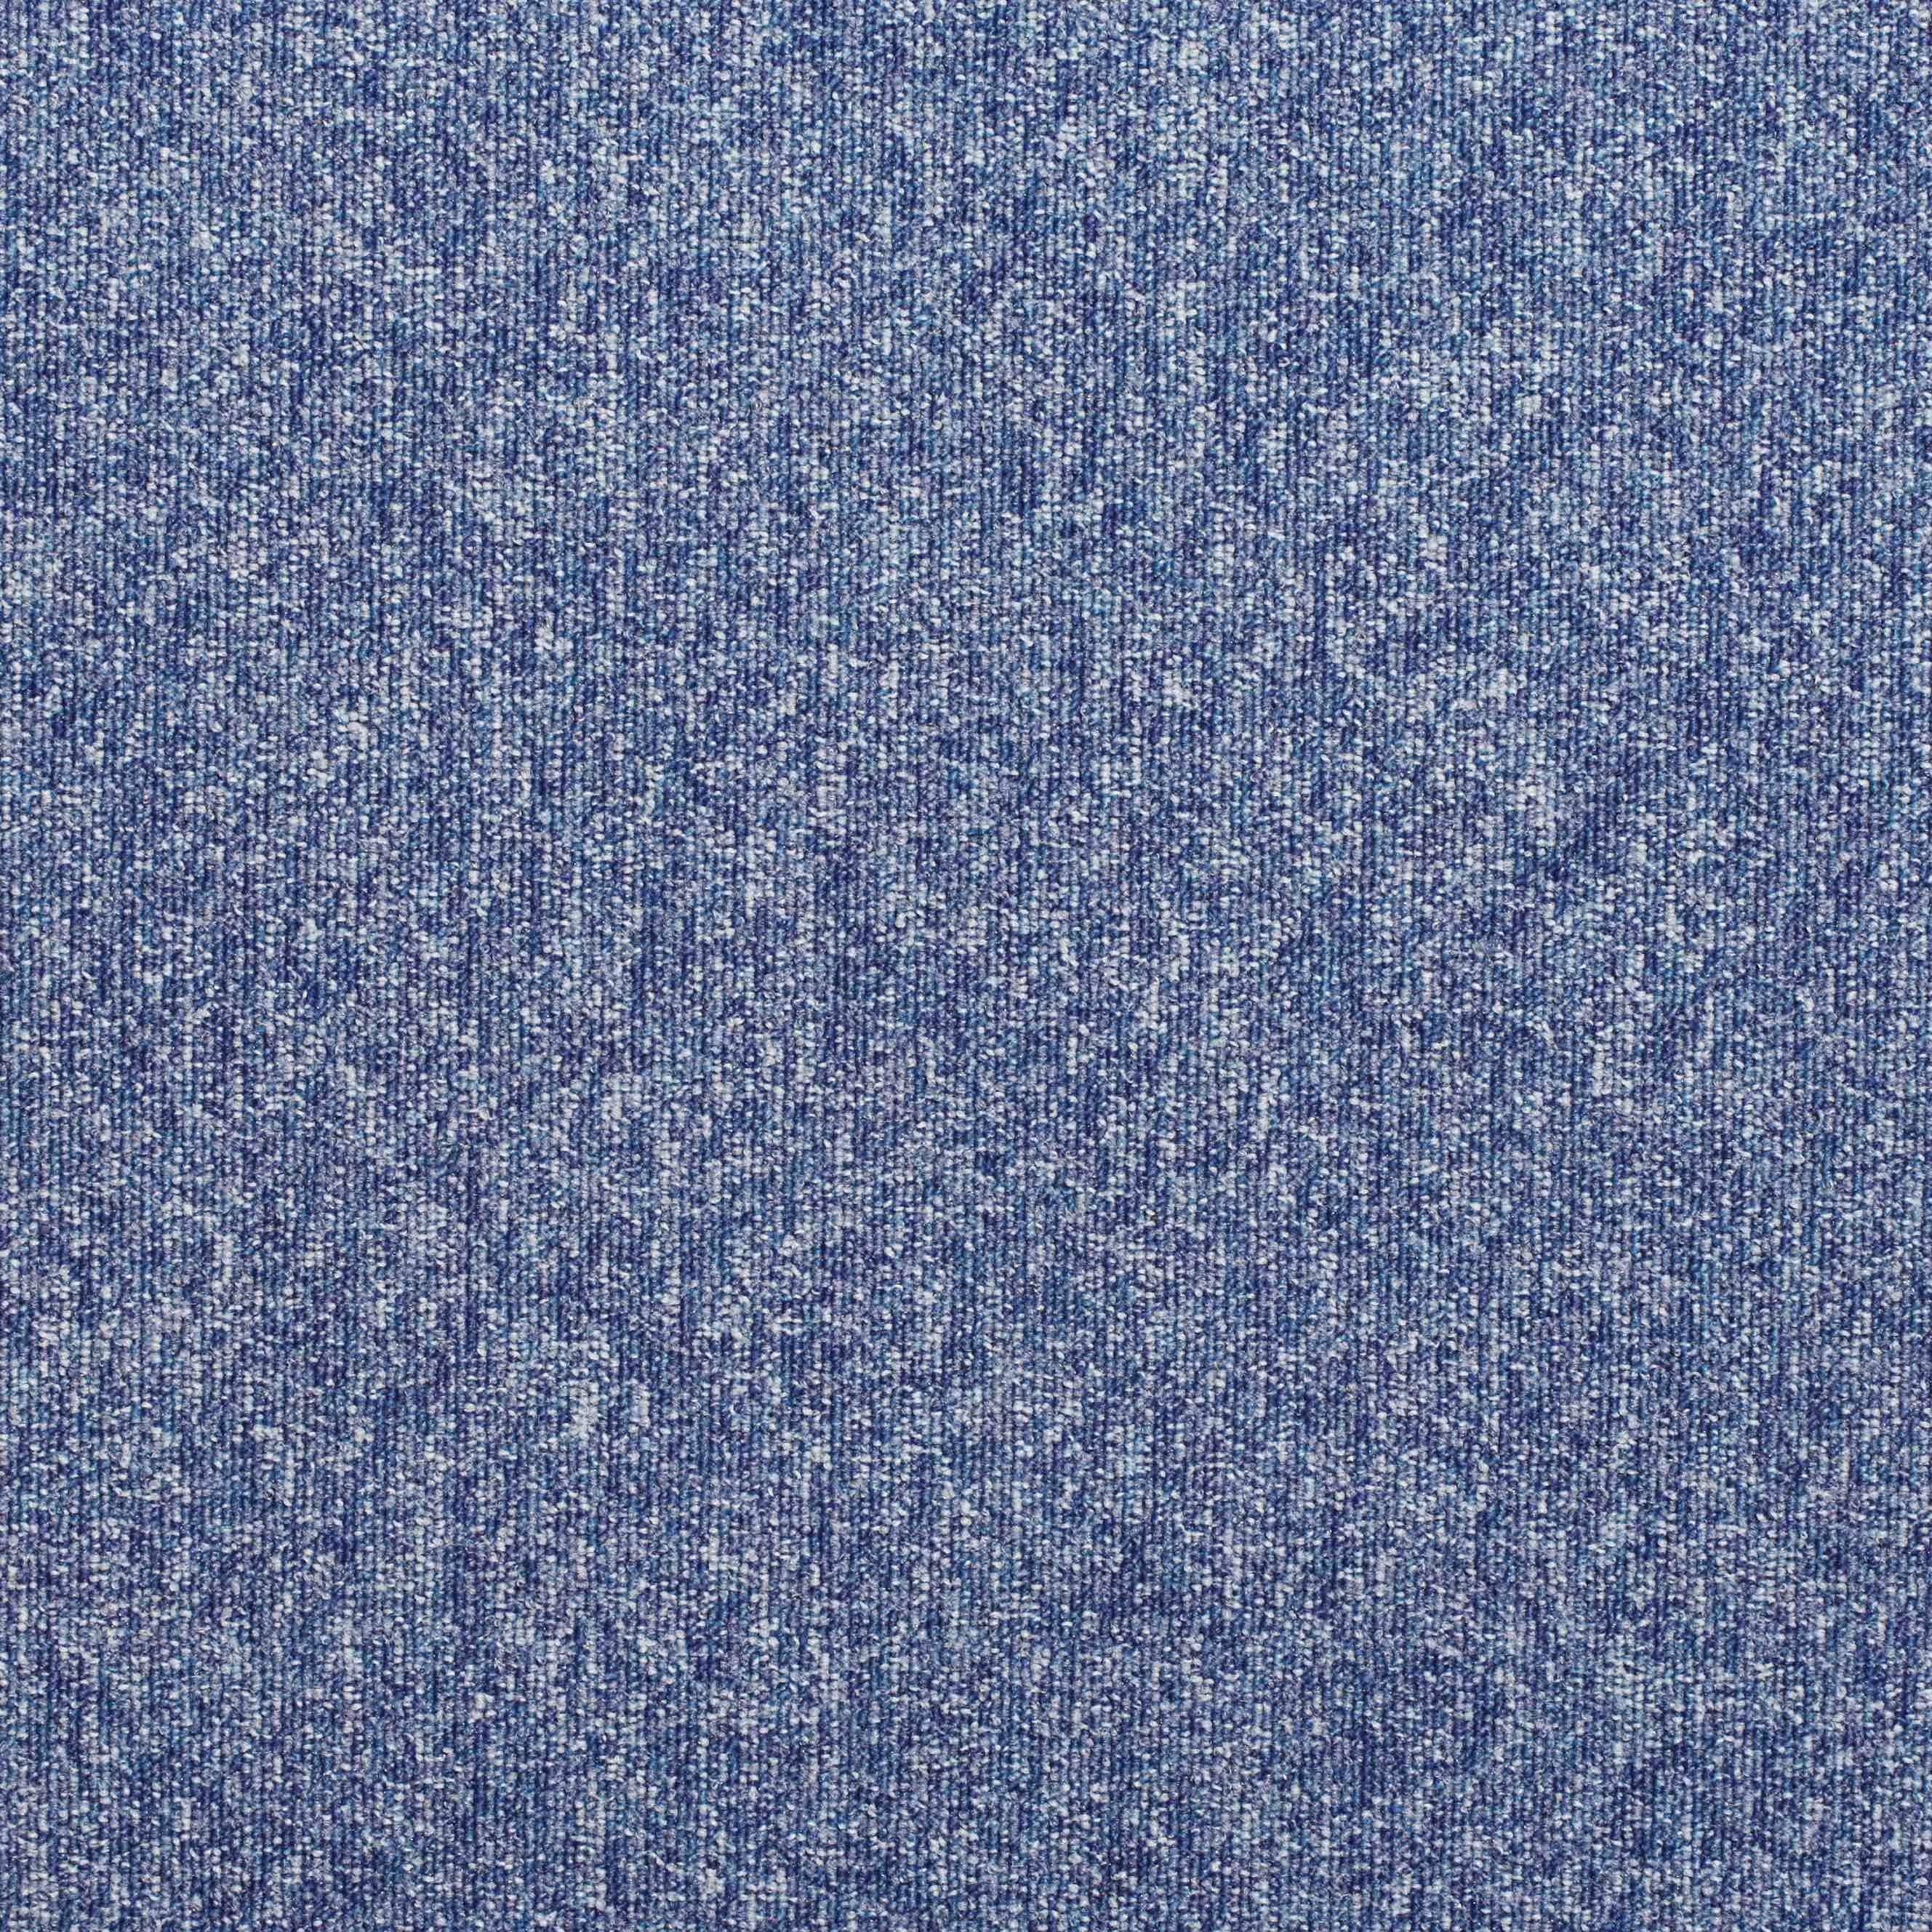 Paragon Workspace Loop Blue Moon Contract Carpet Tile